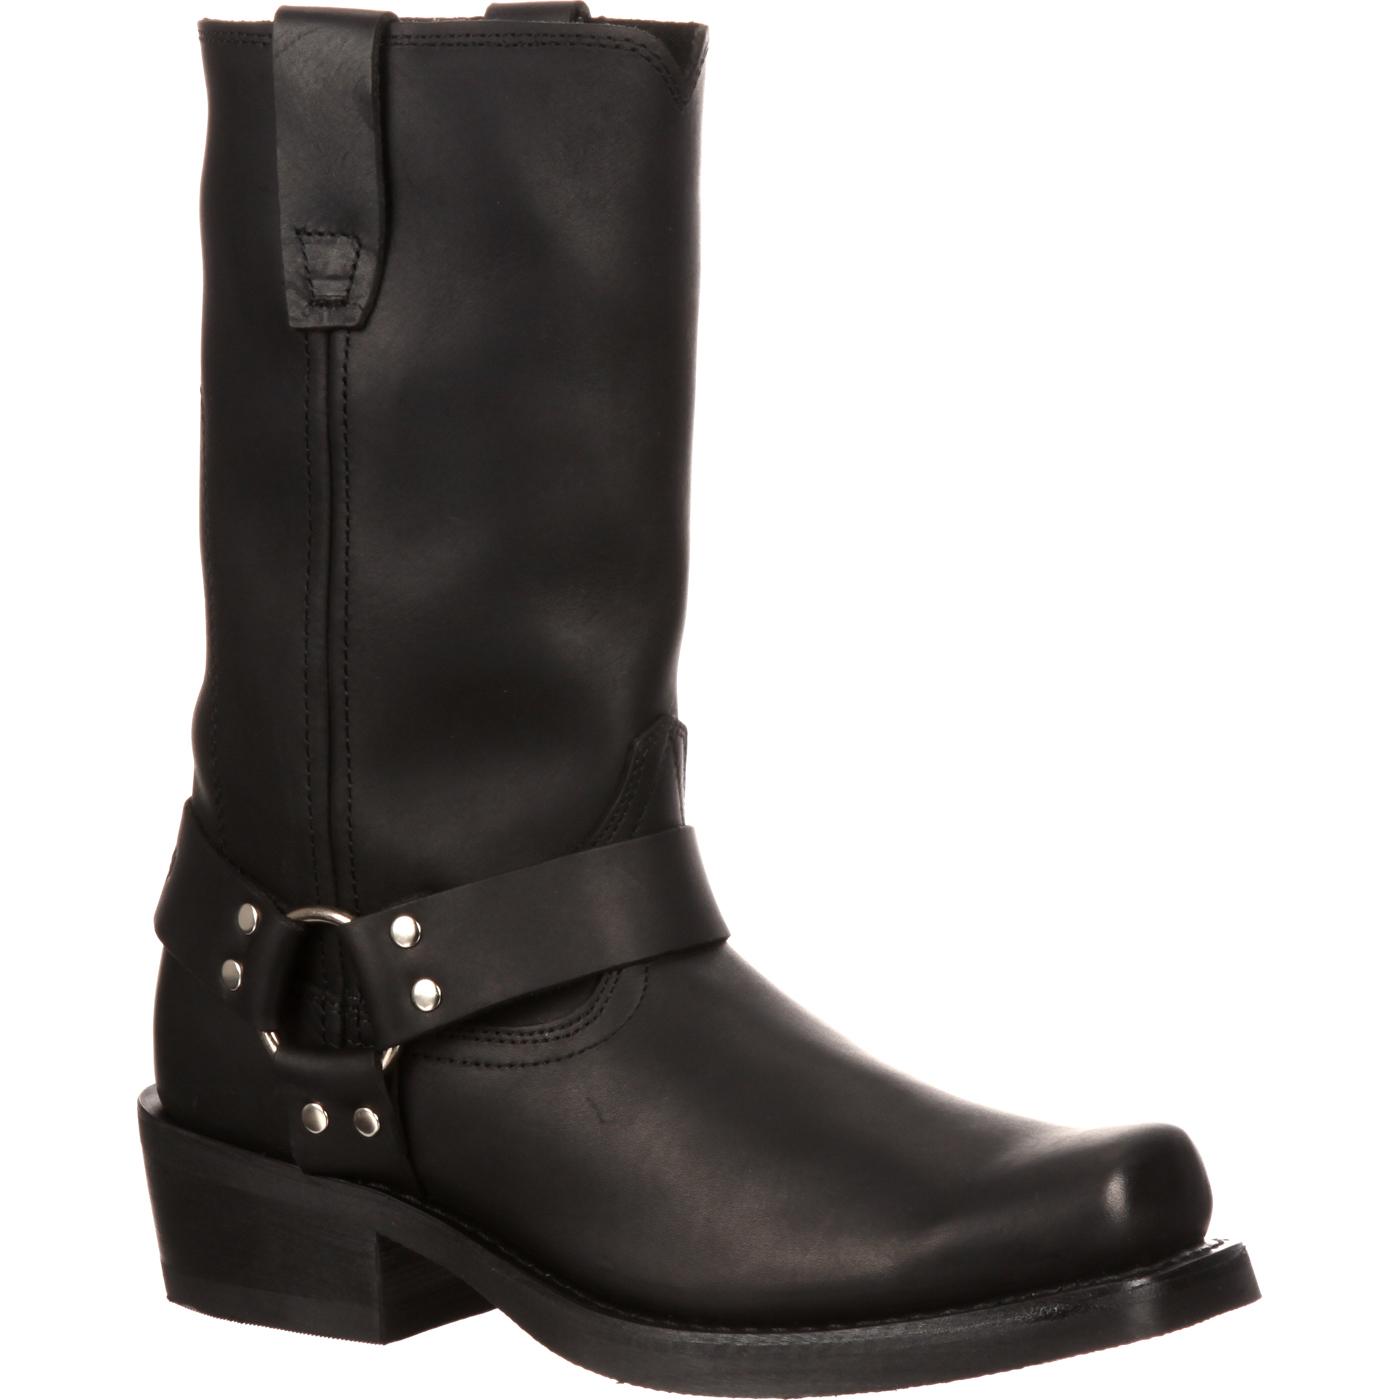 Durango: Men's 11-Inch Black Harness Boots, style DB510